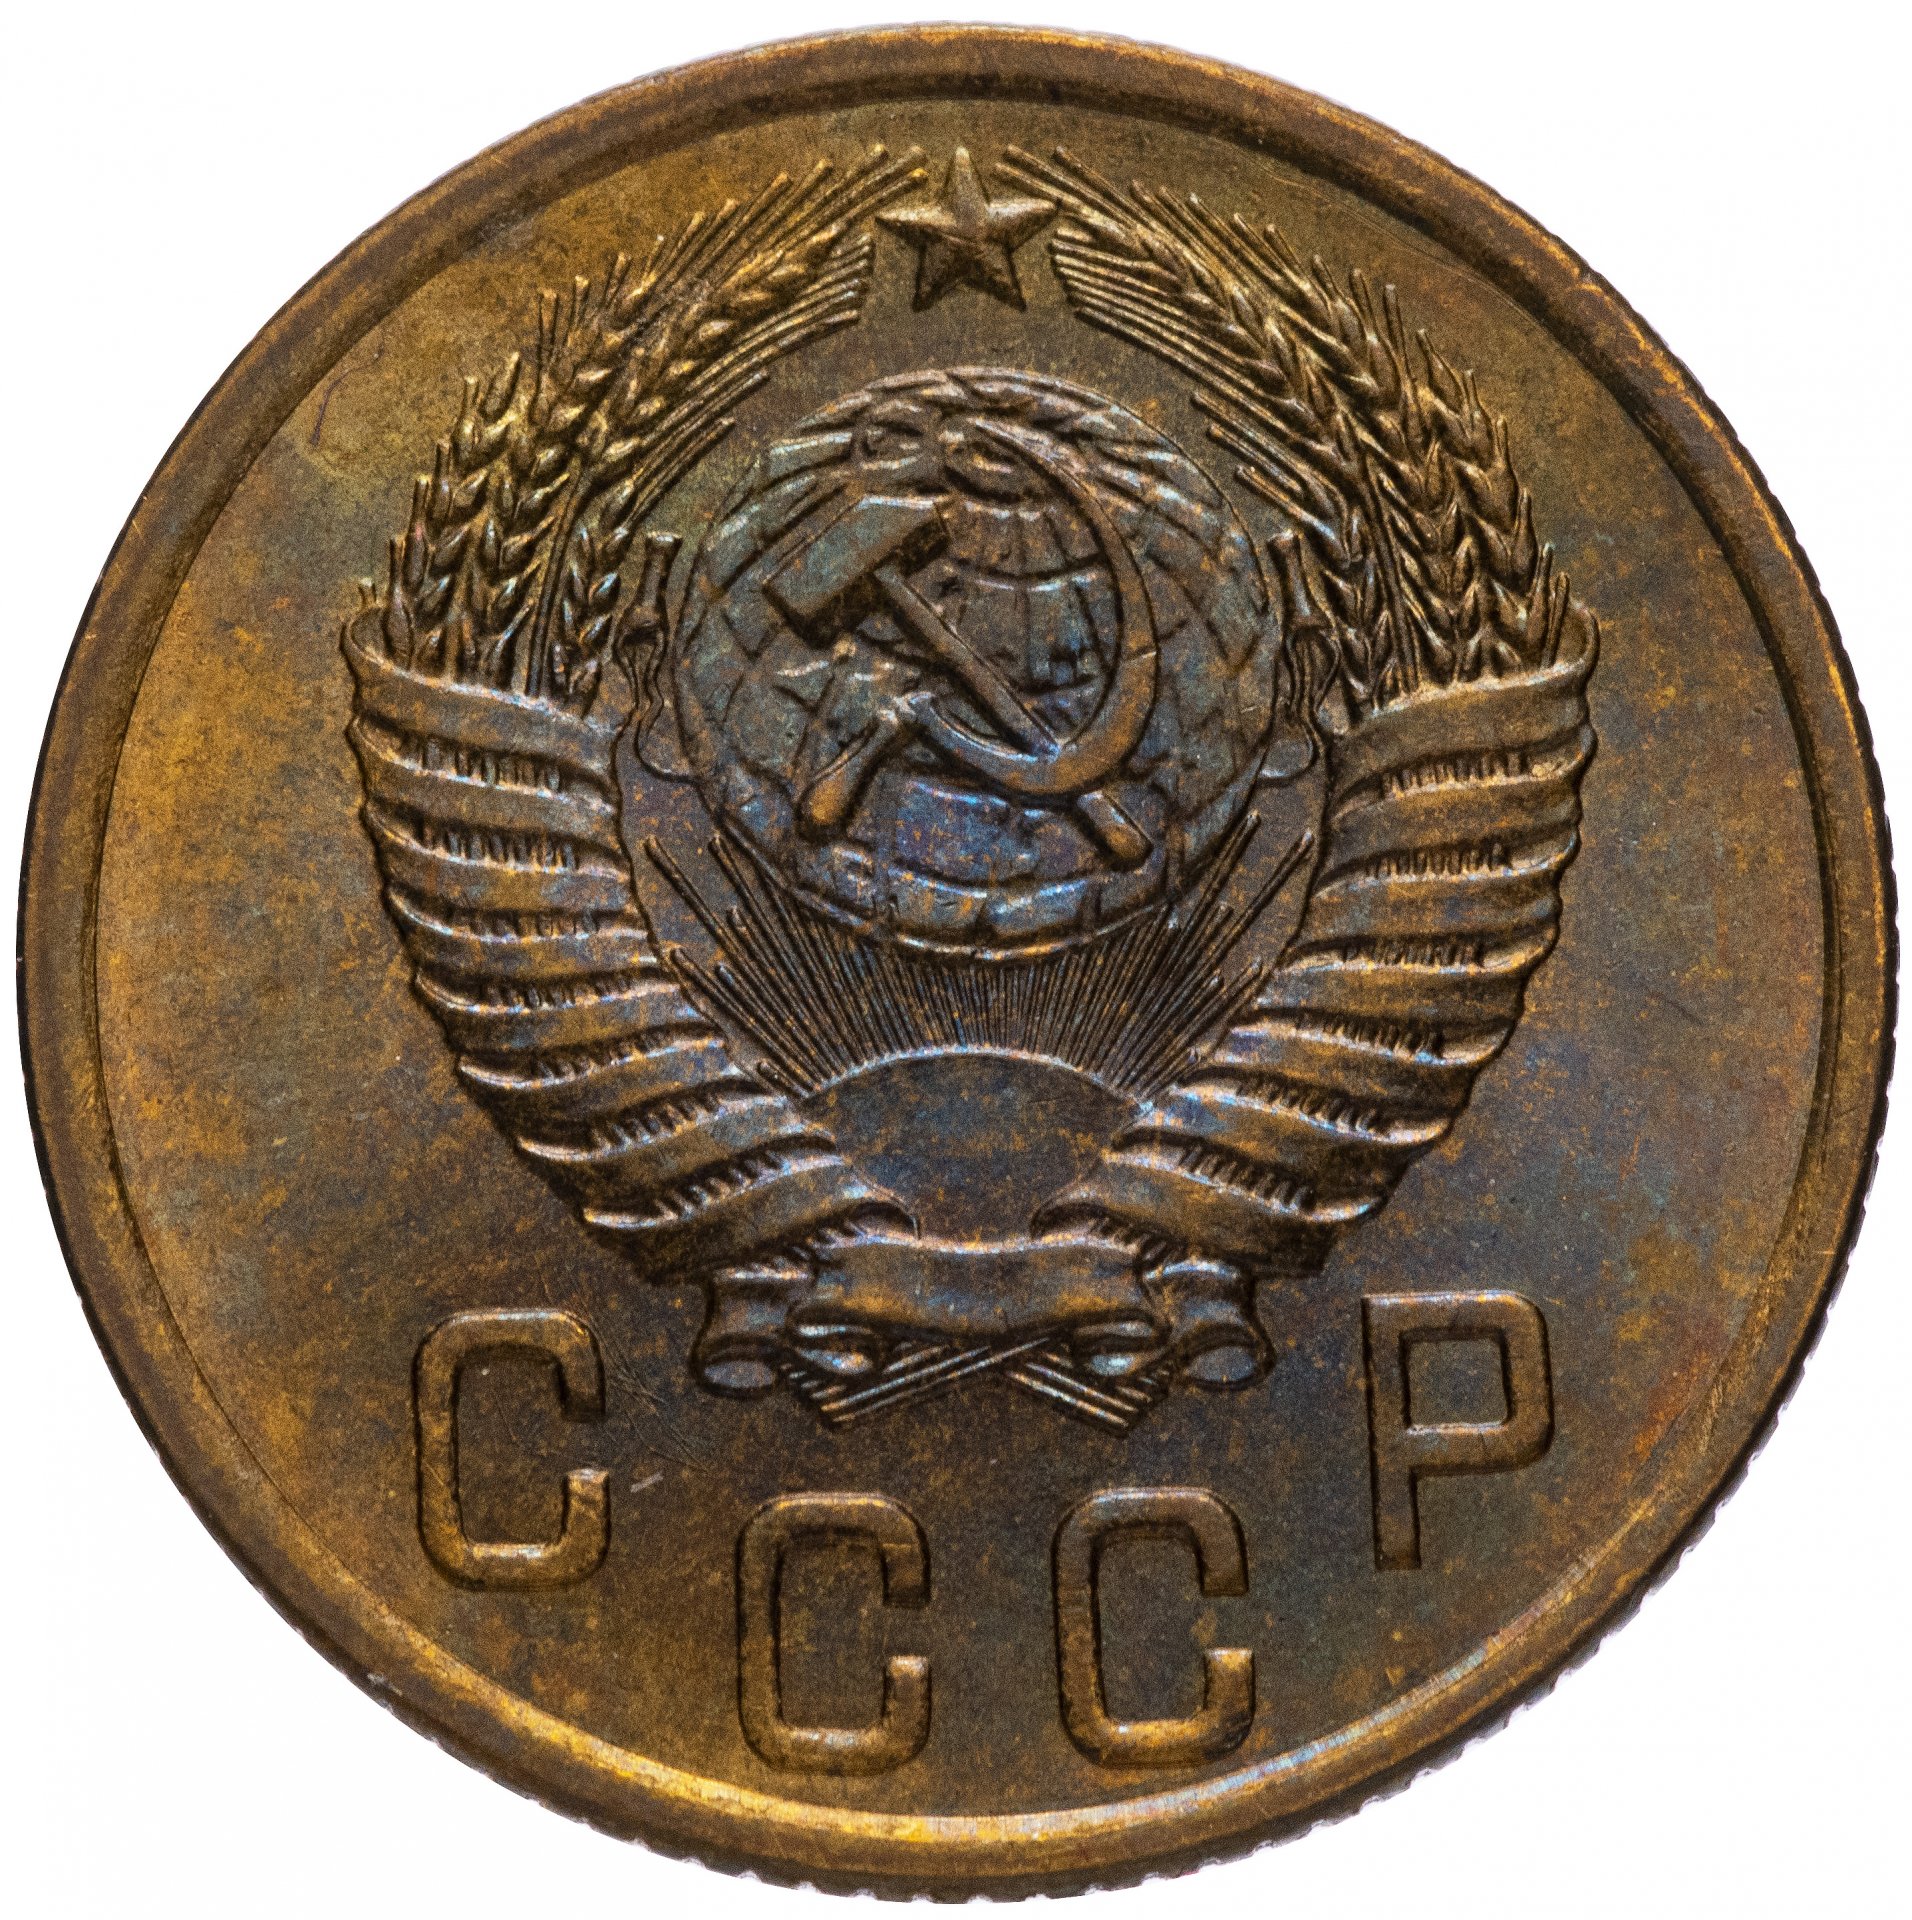 1956 год монеты цена